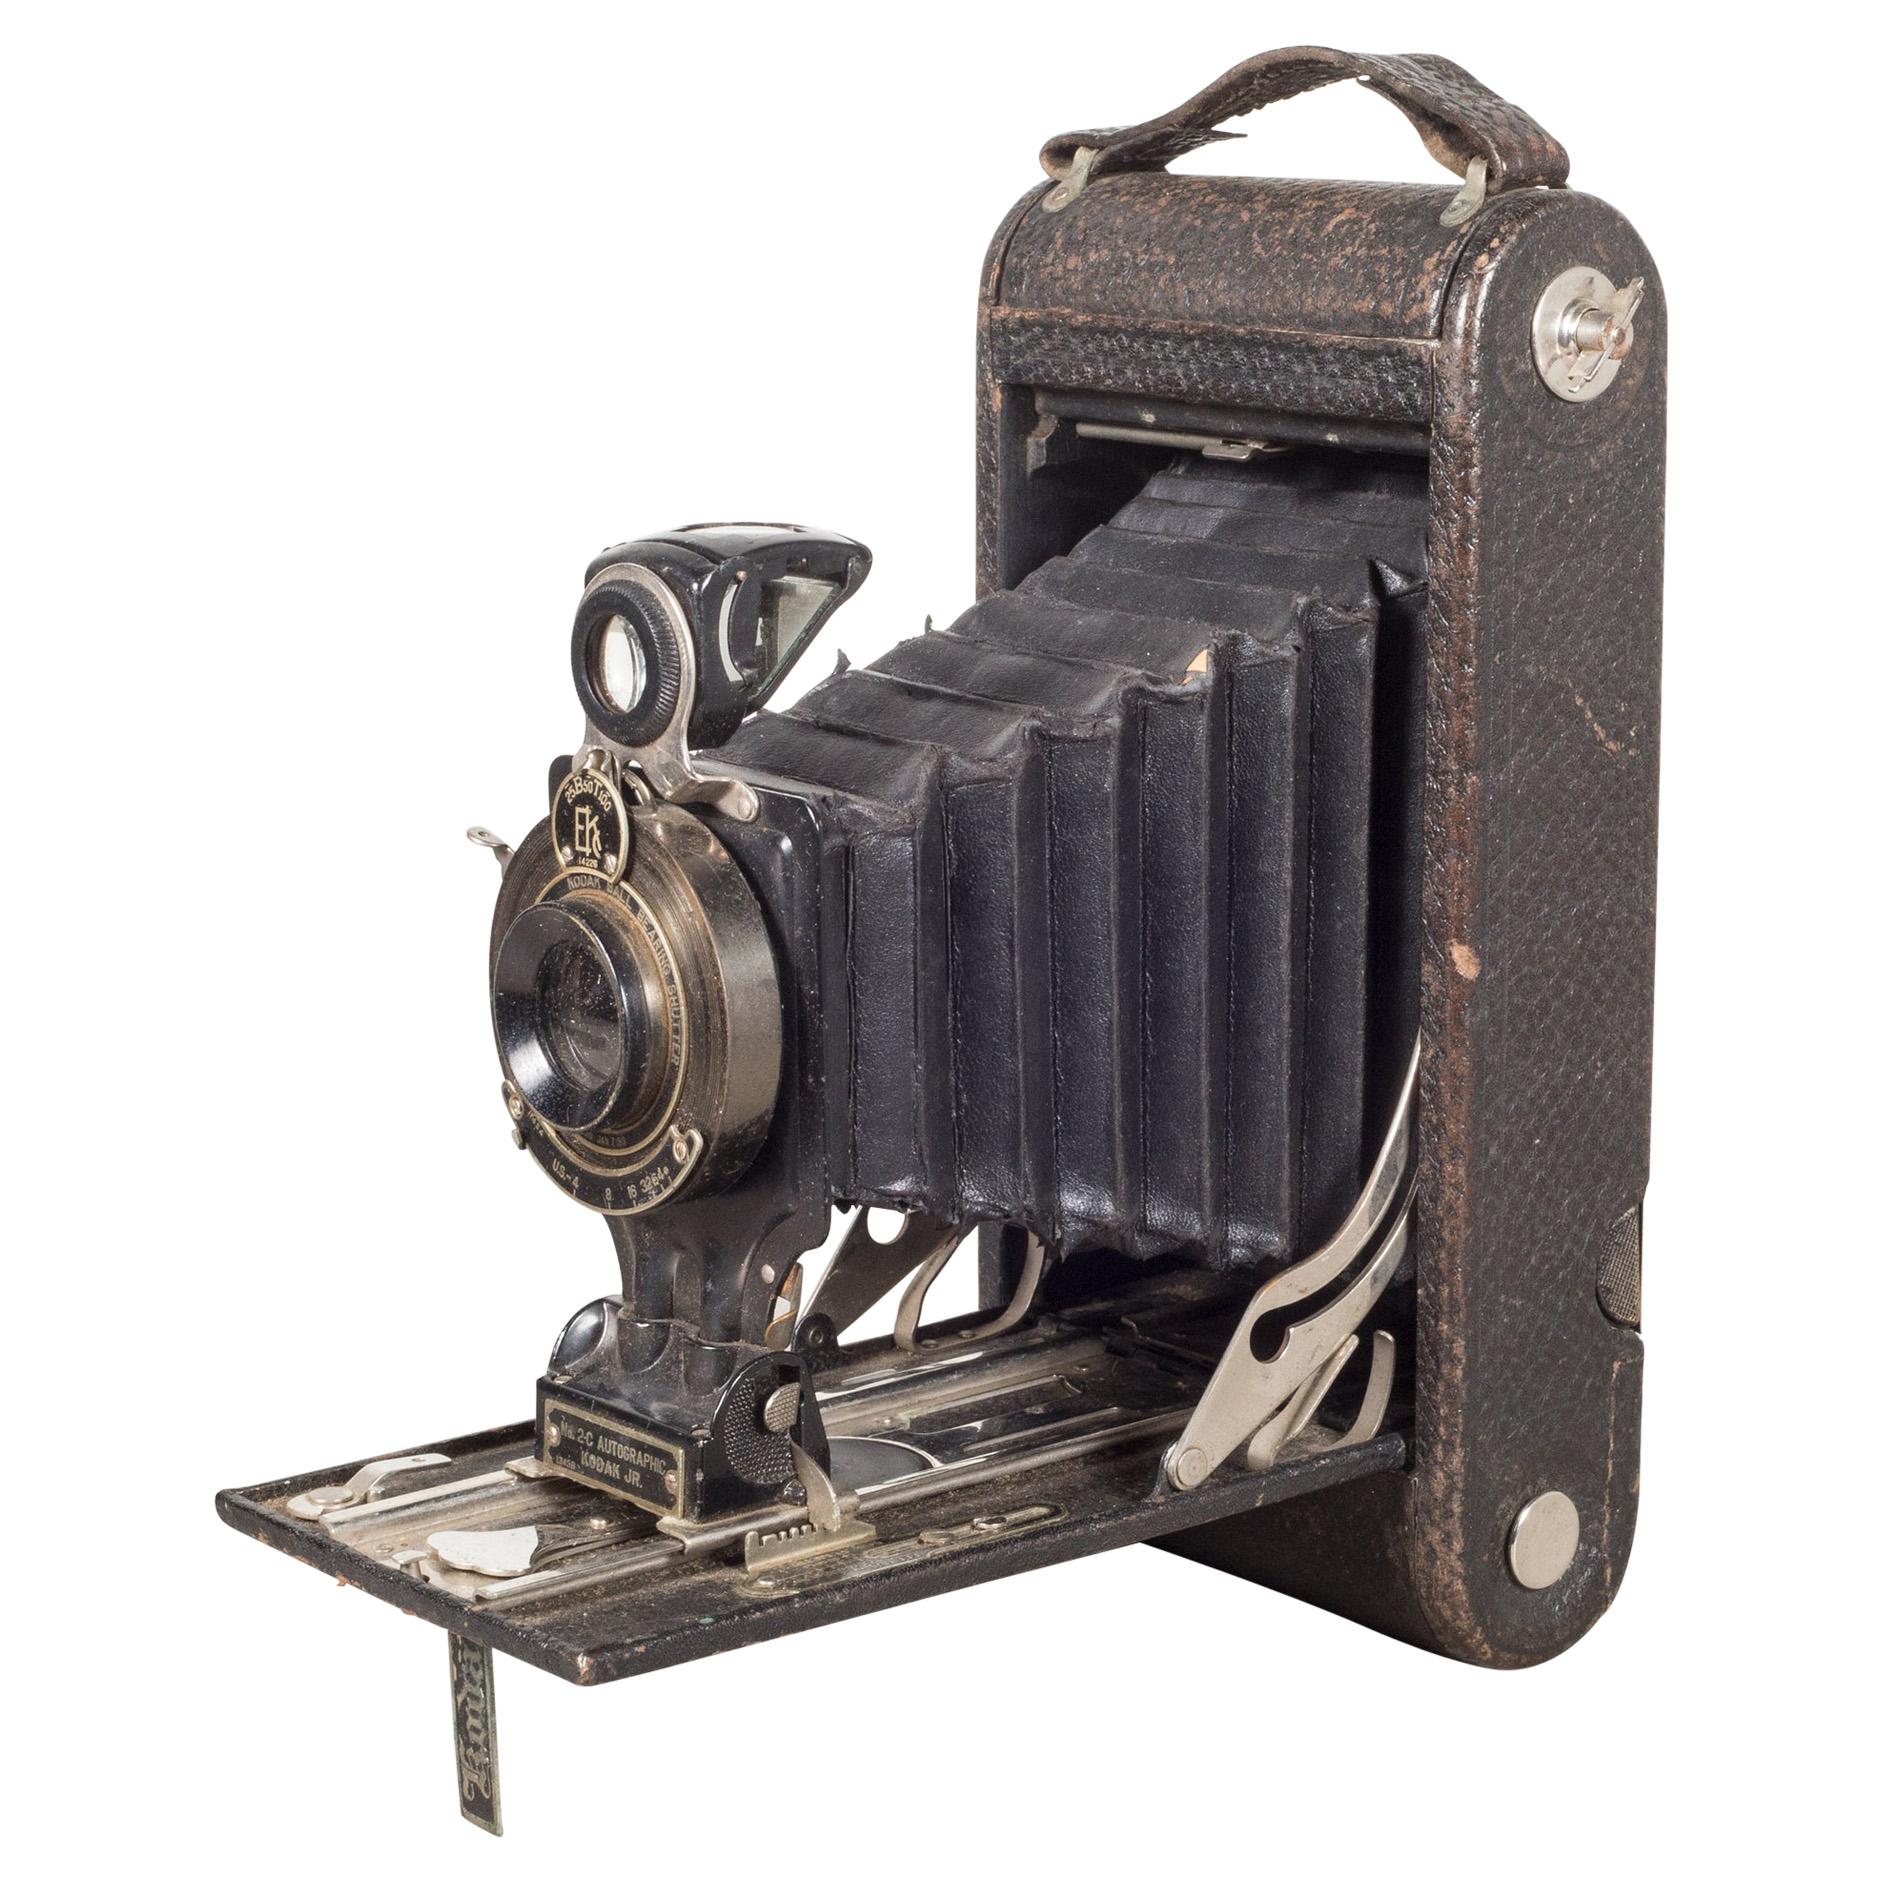 Antique Eastman Kodak "No. 2C Pocket Kodak" Folding Camera, circa 1916